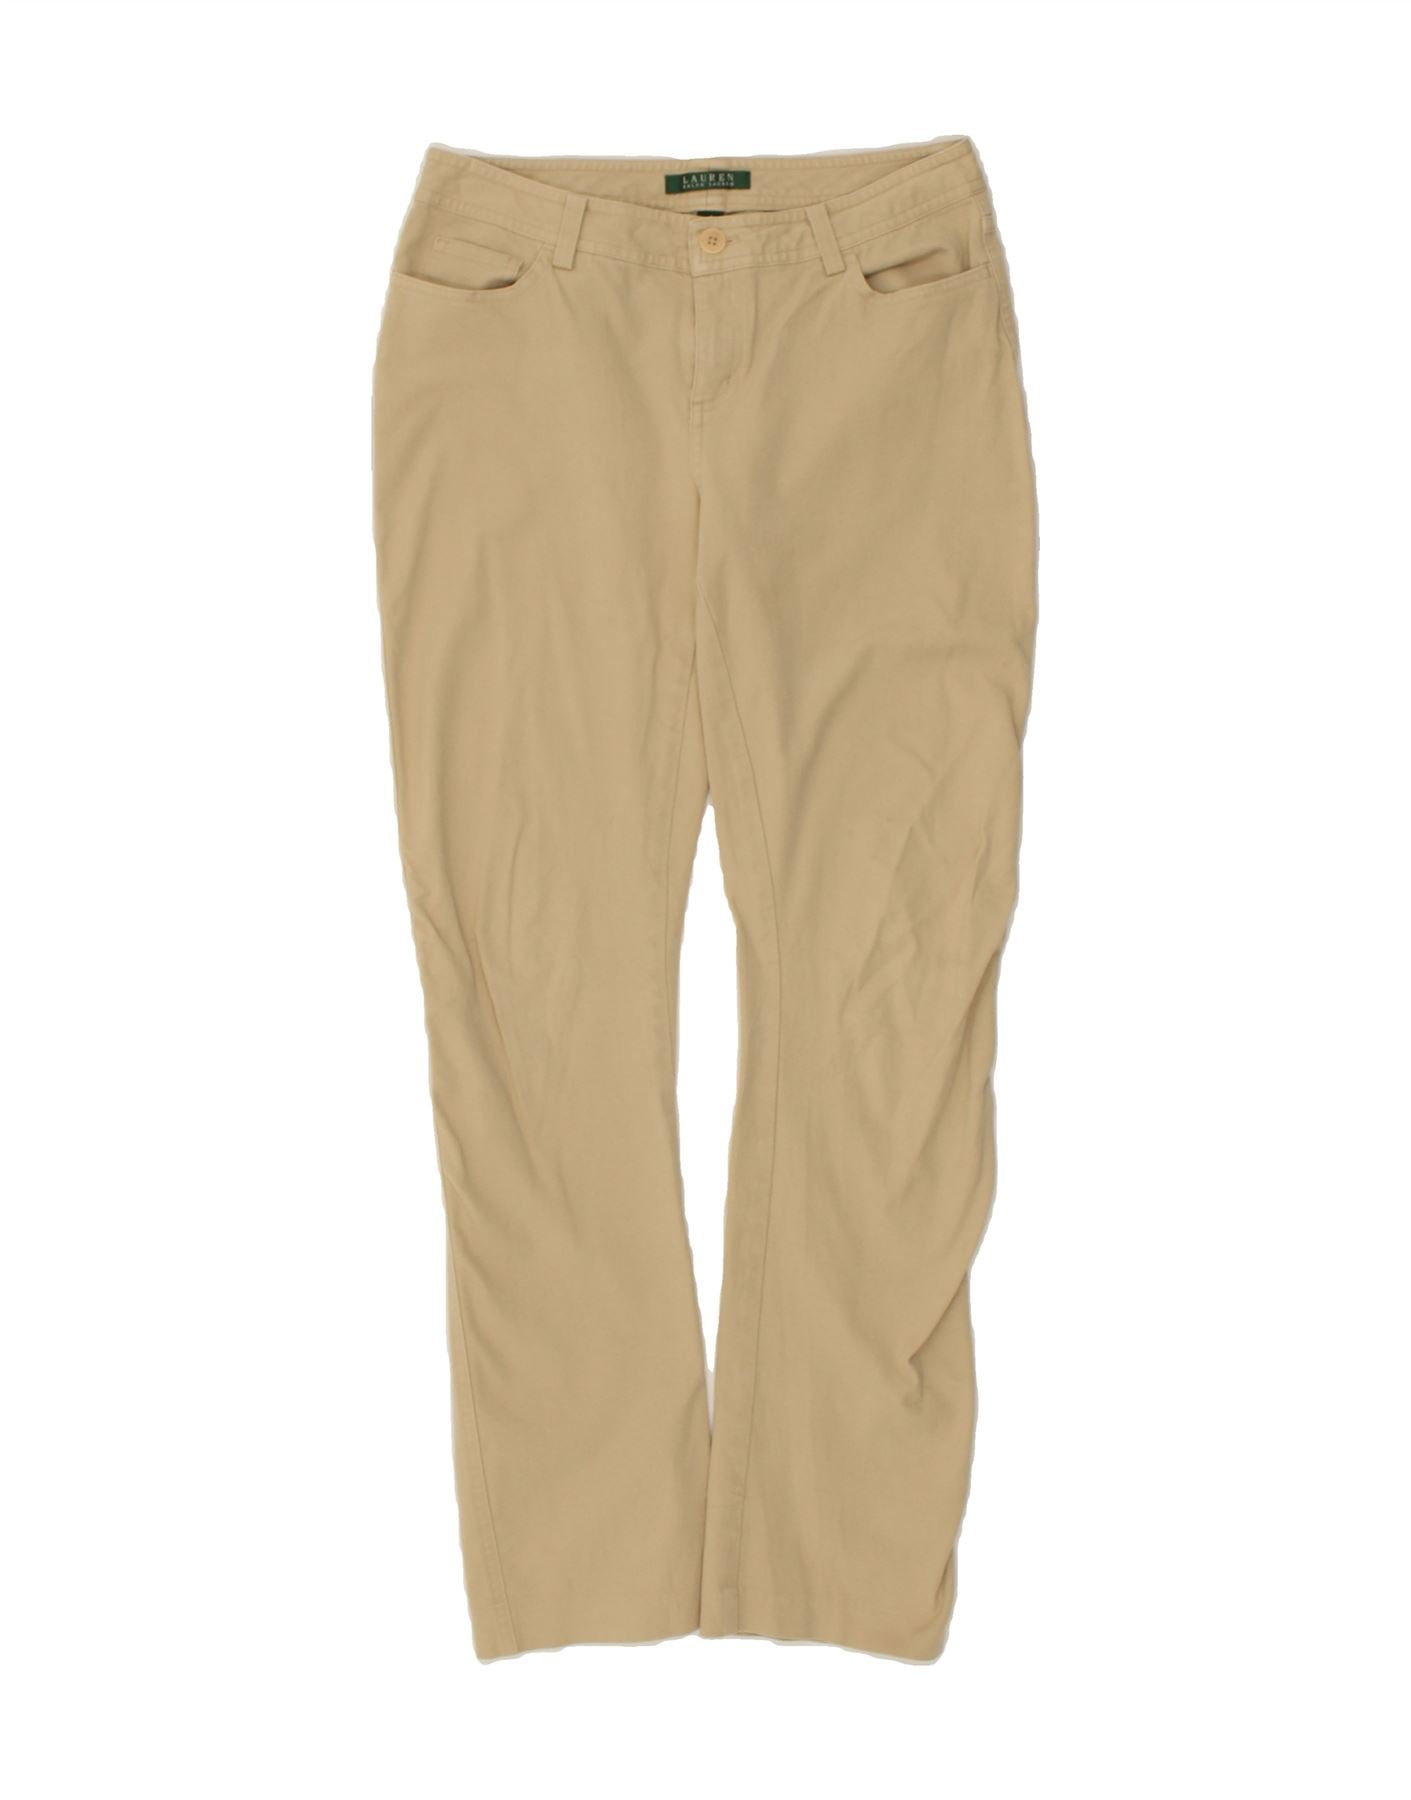 RALPH LAUREN Womens Slim Casual Trousers US 4 Small W28 L29 Beige Cotton